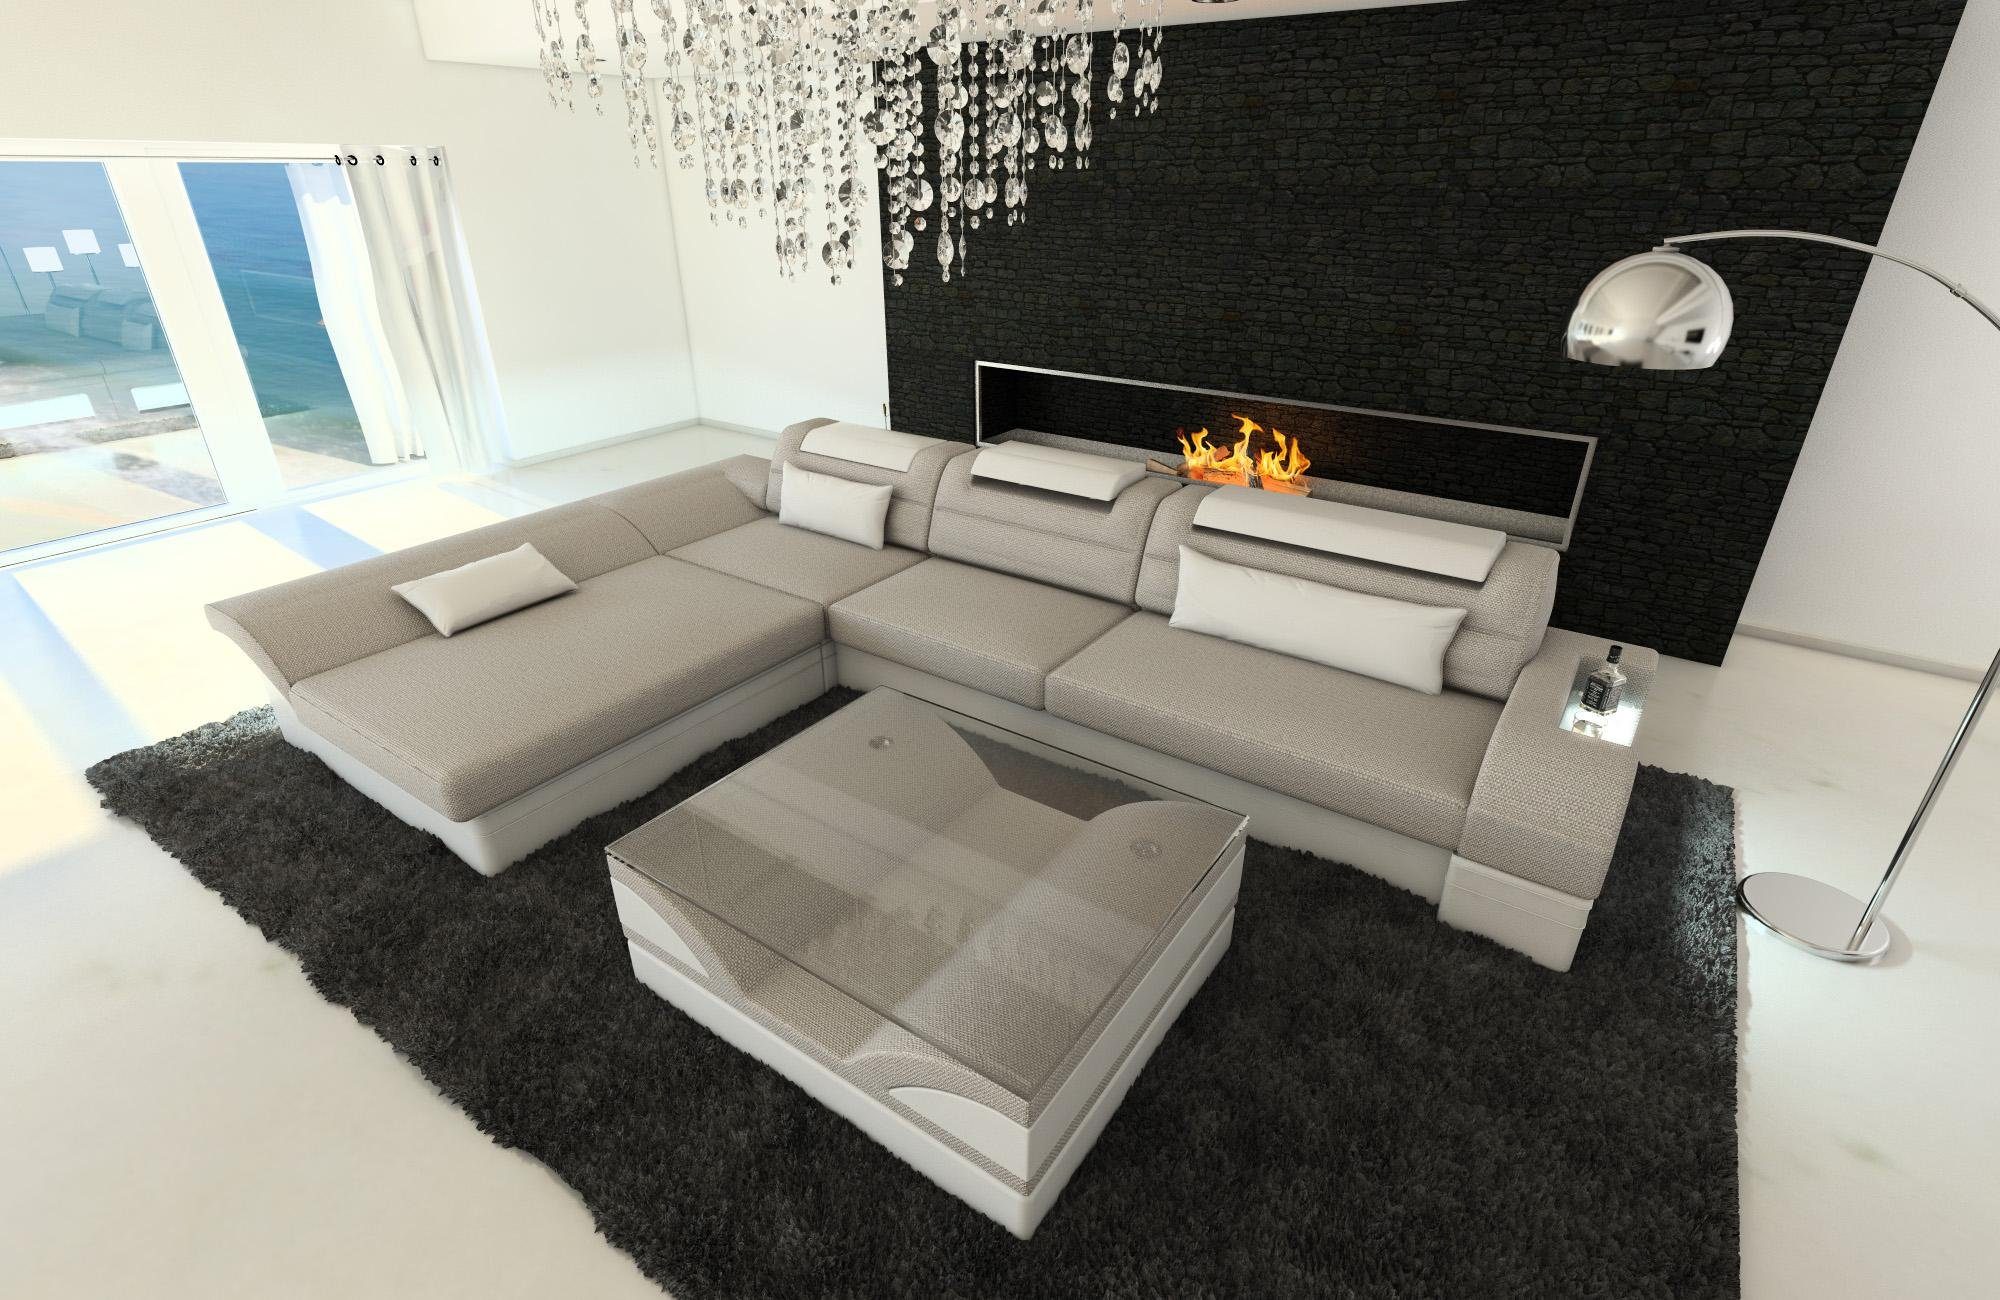 Polstersofa mit Macchiato-Weiss Couch LED, L Ecksofa Sofa Dreams Stoffsofa H2 Designersofa Monza Stoff ausziehbare Bettfunktion, Form,